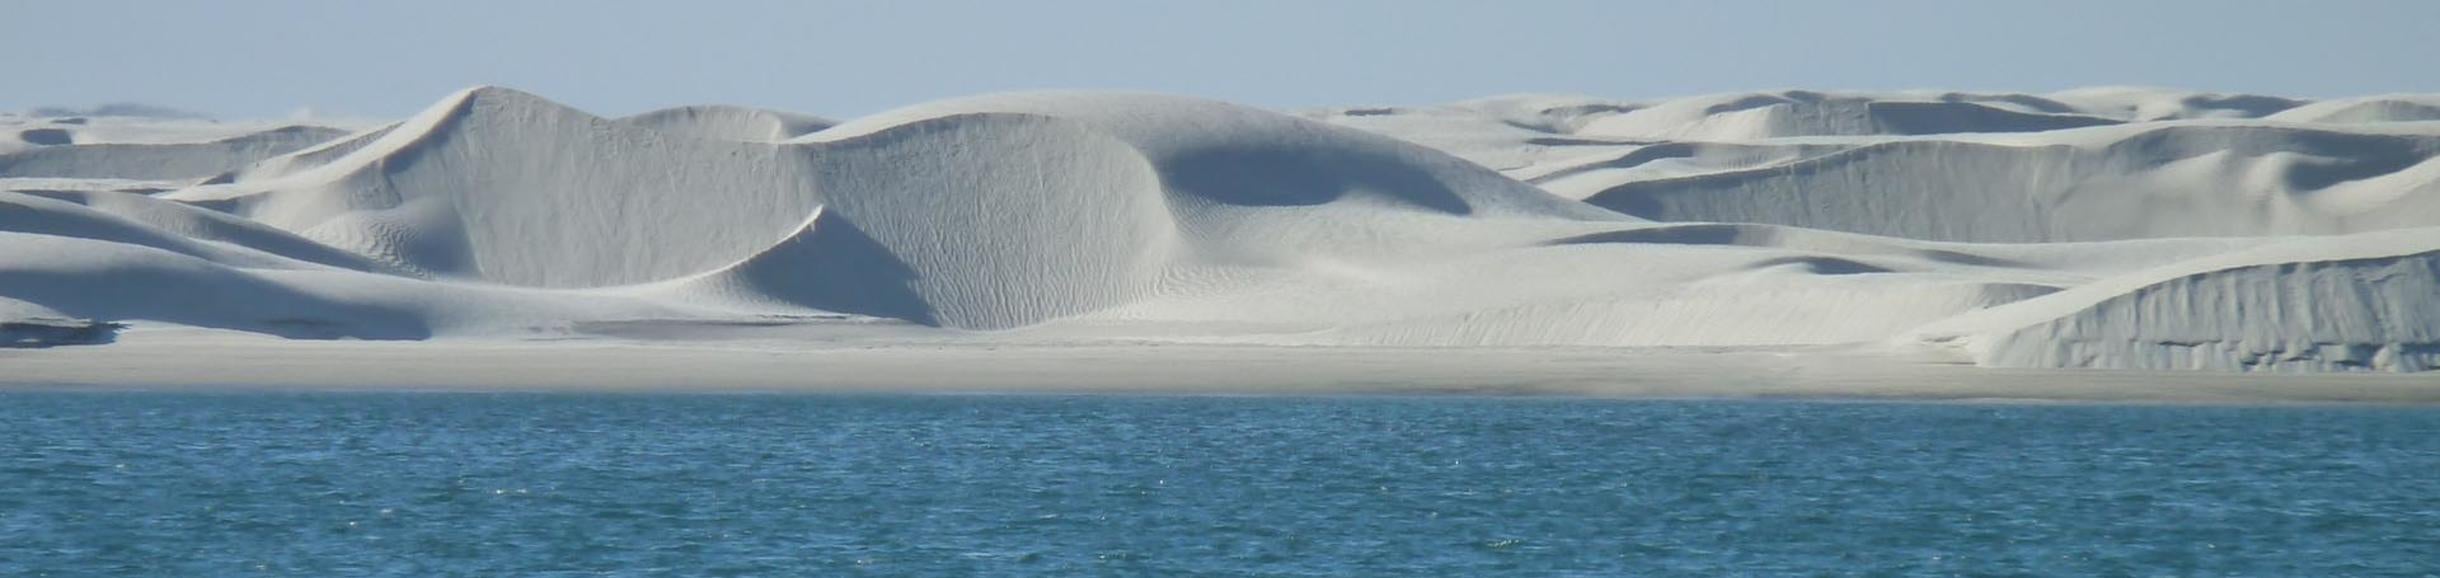 Dunes, Baja California